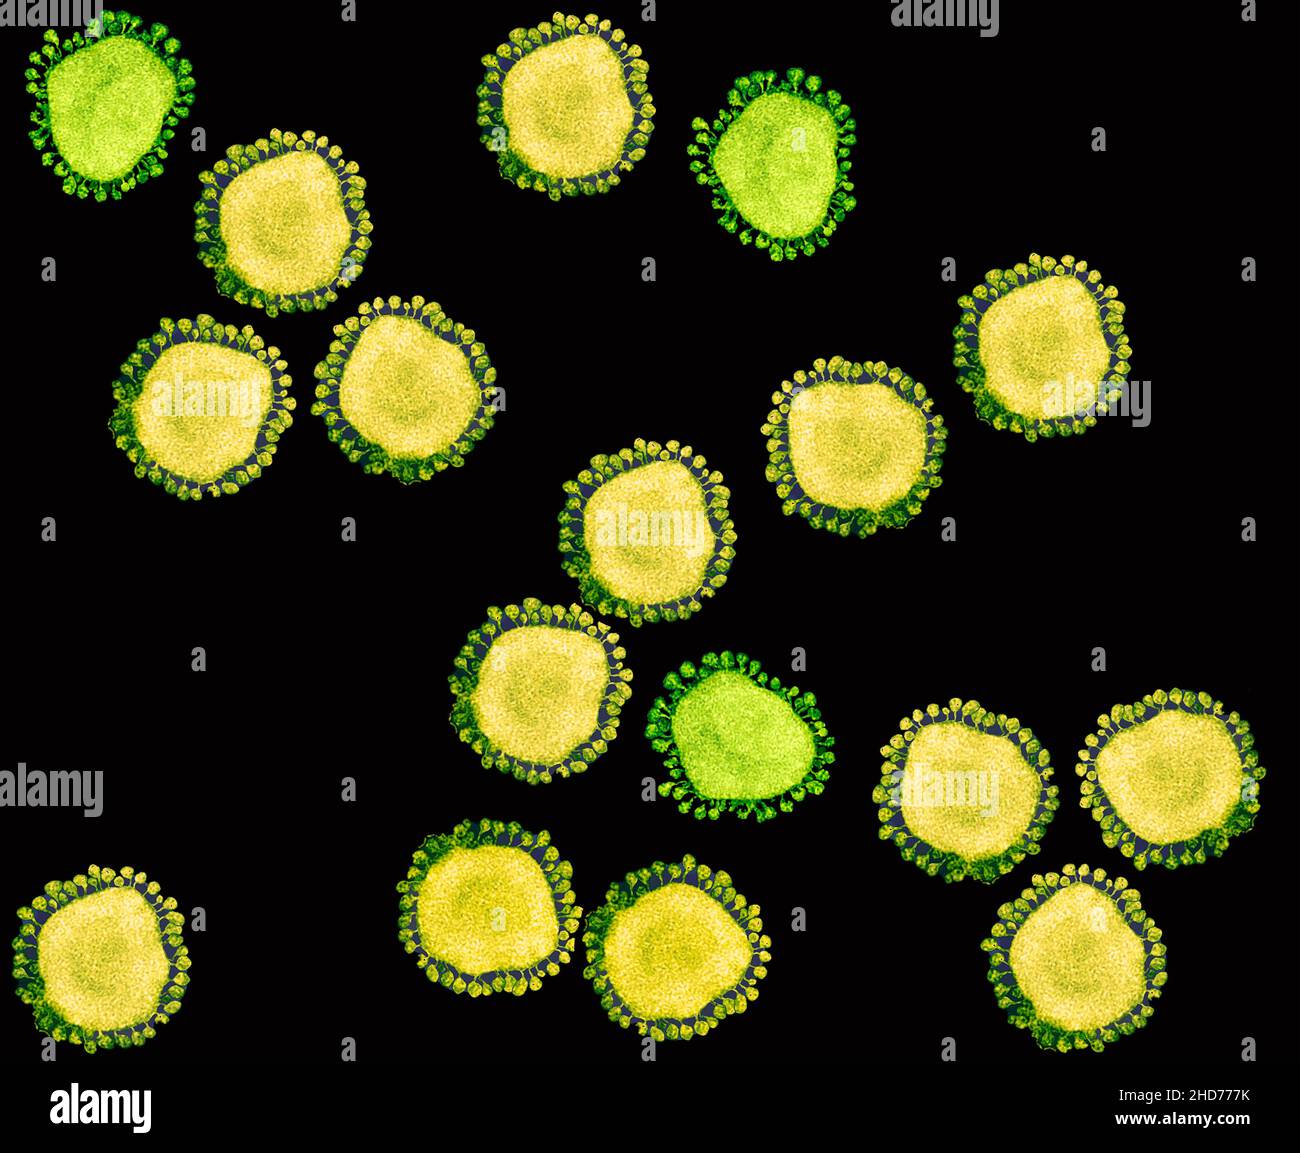 Purified coronavirus Covid-19 particles under transmission electron microscopy (TEM). Stock Photo